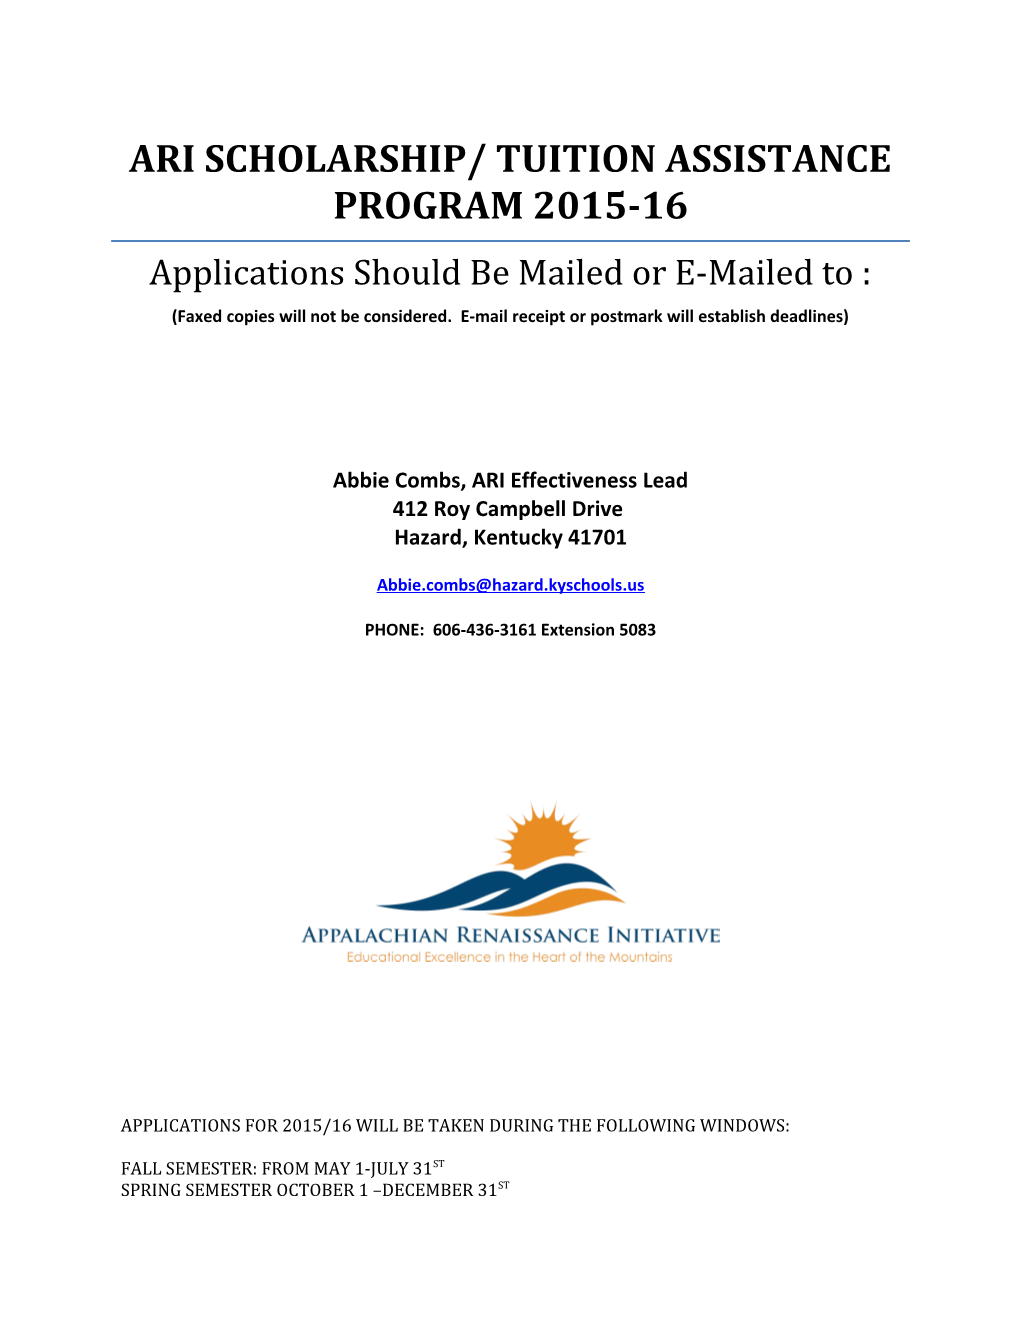 Ari Scholarship/ Tuition Assistance Program 2015-16